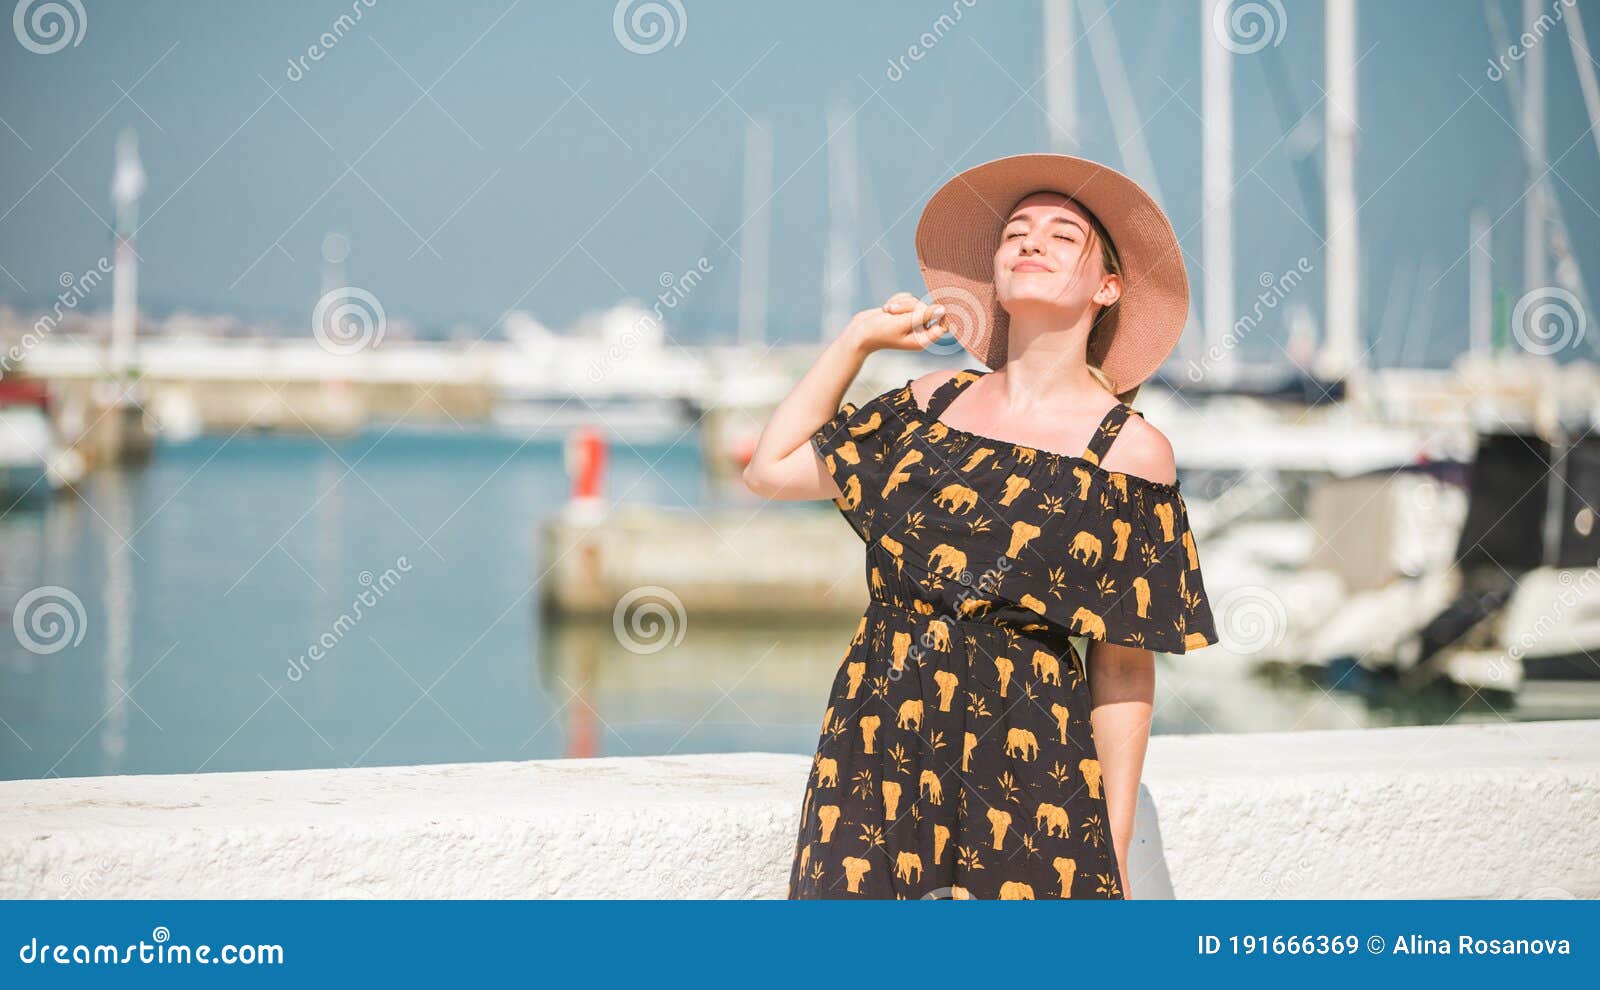 curvy beach dress